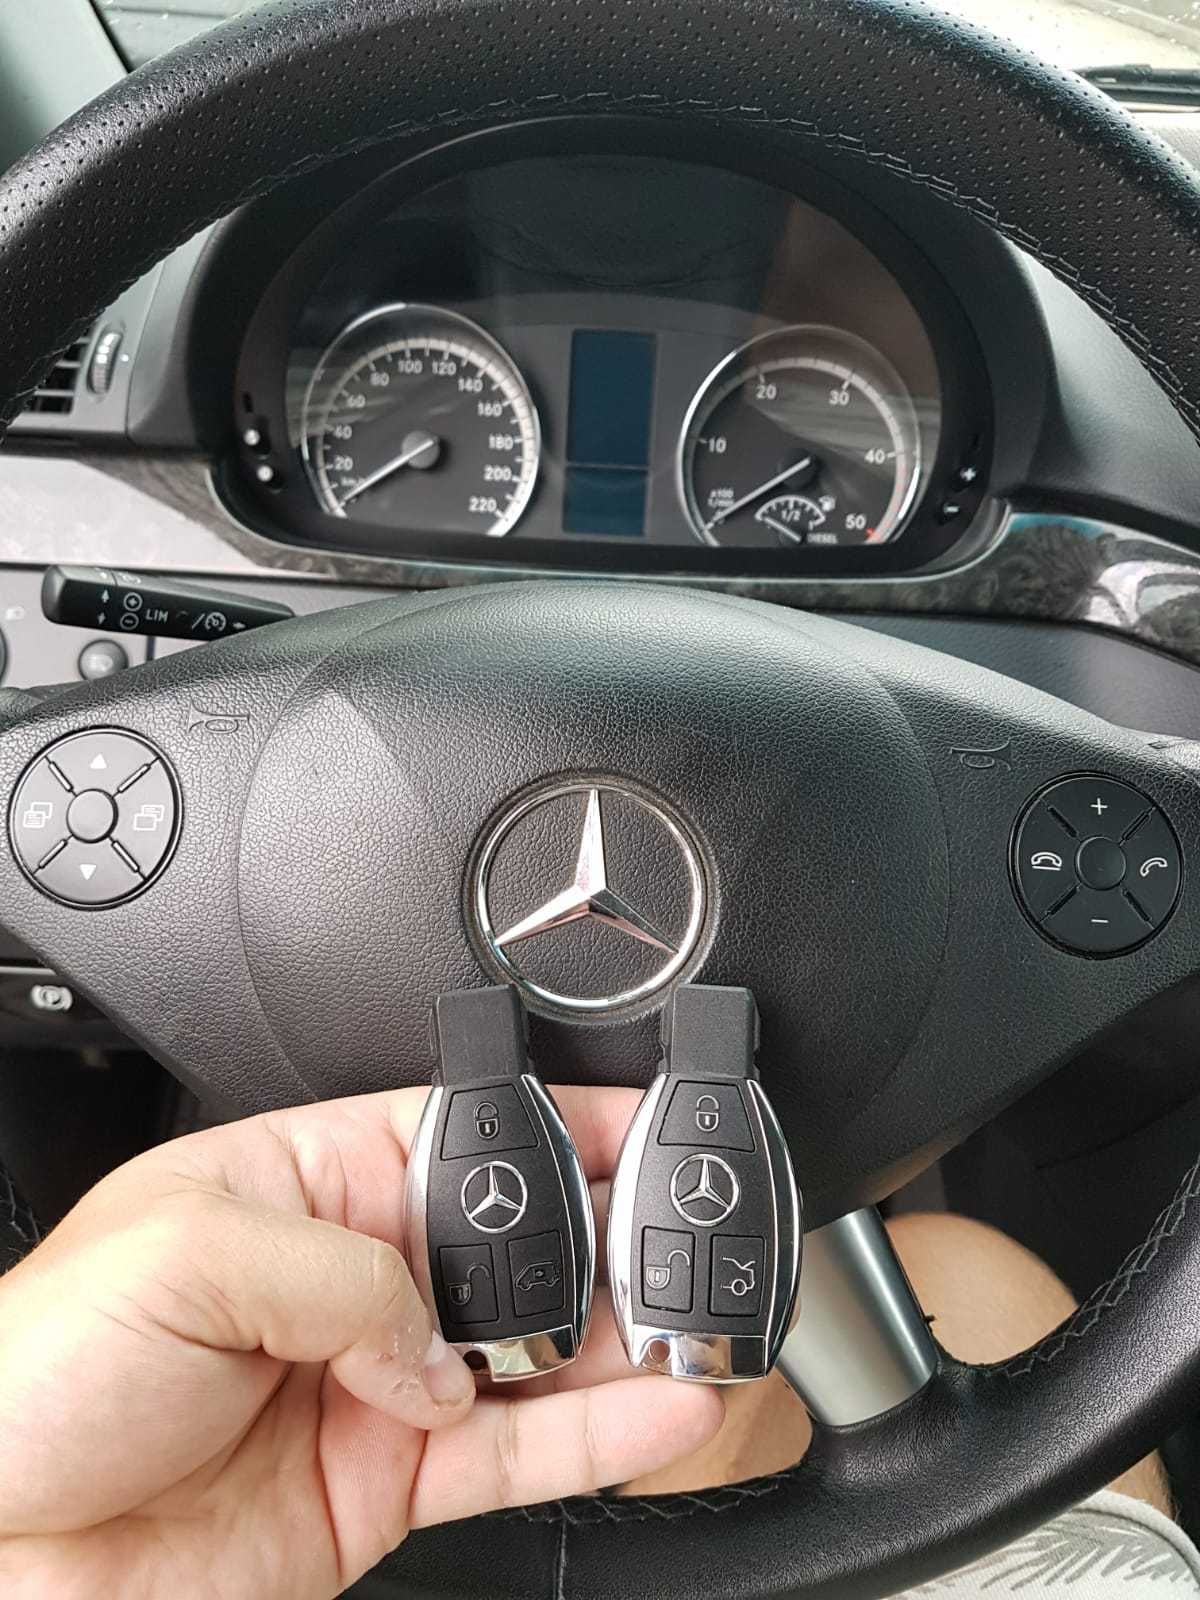 Cheie noua BMW Mercedes orice model. Se pot si Programa Coda pe masina